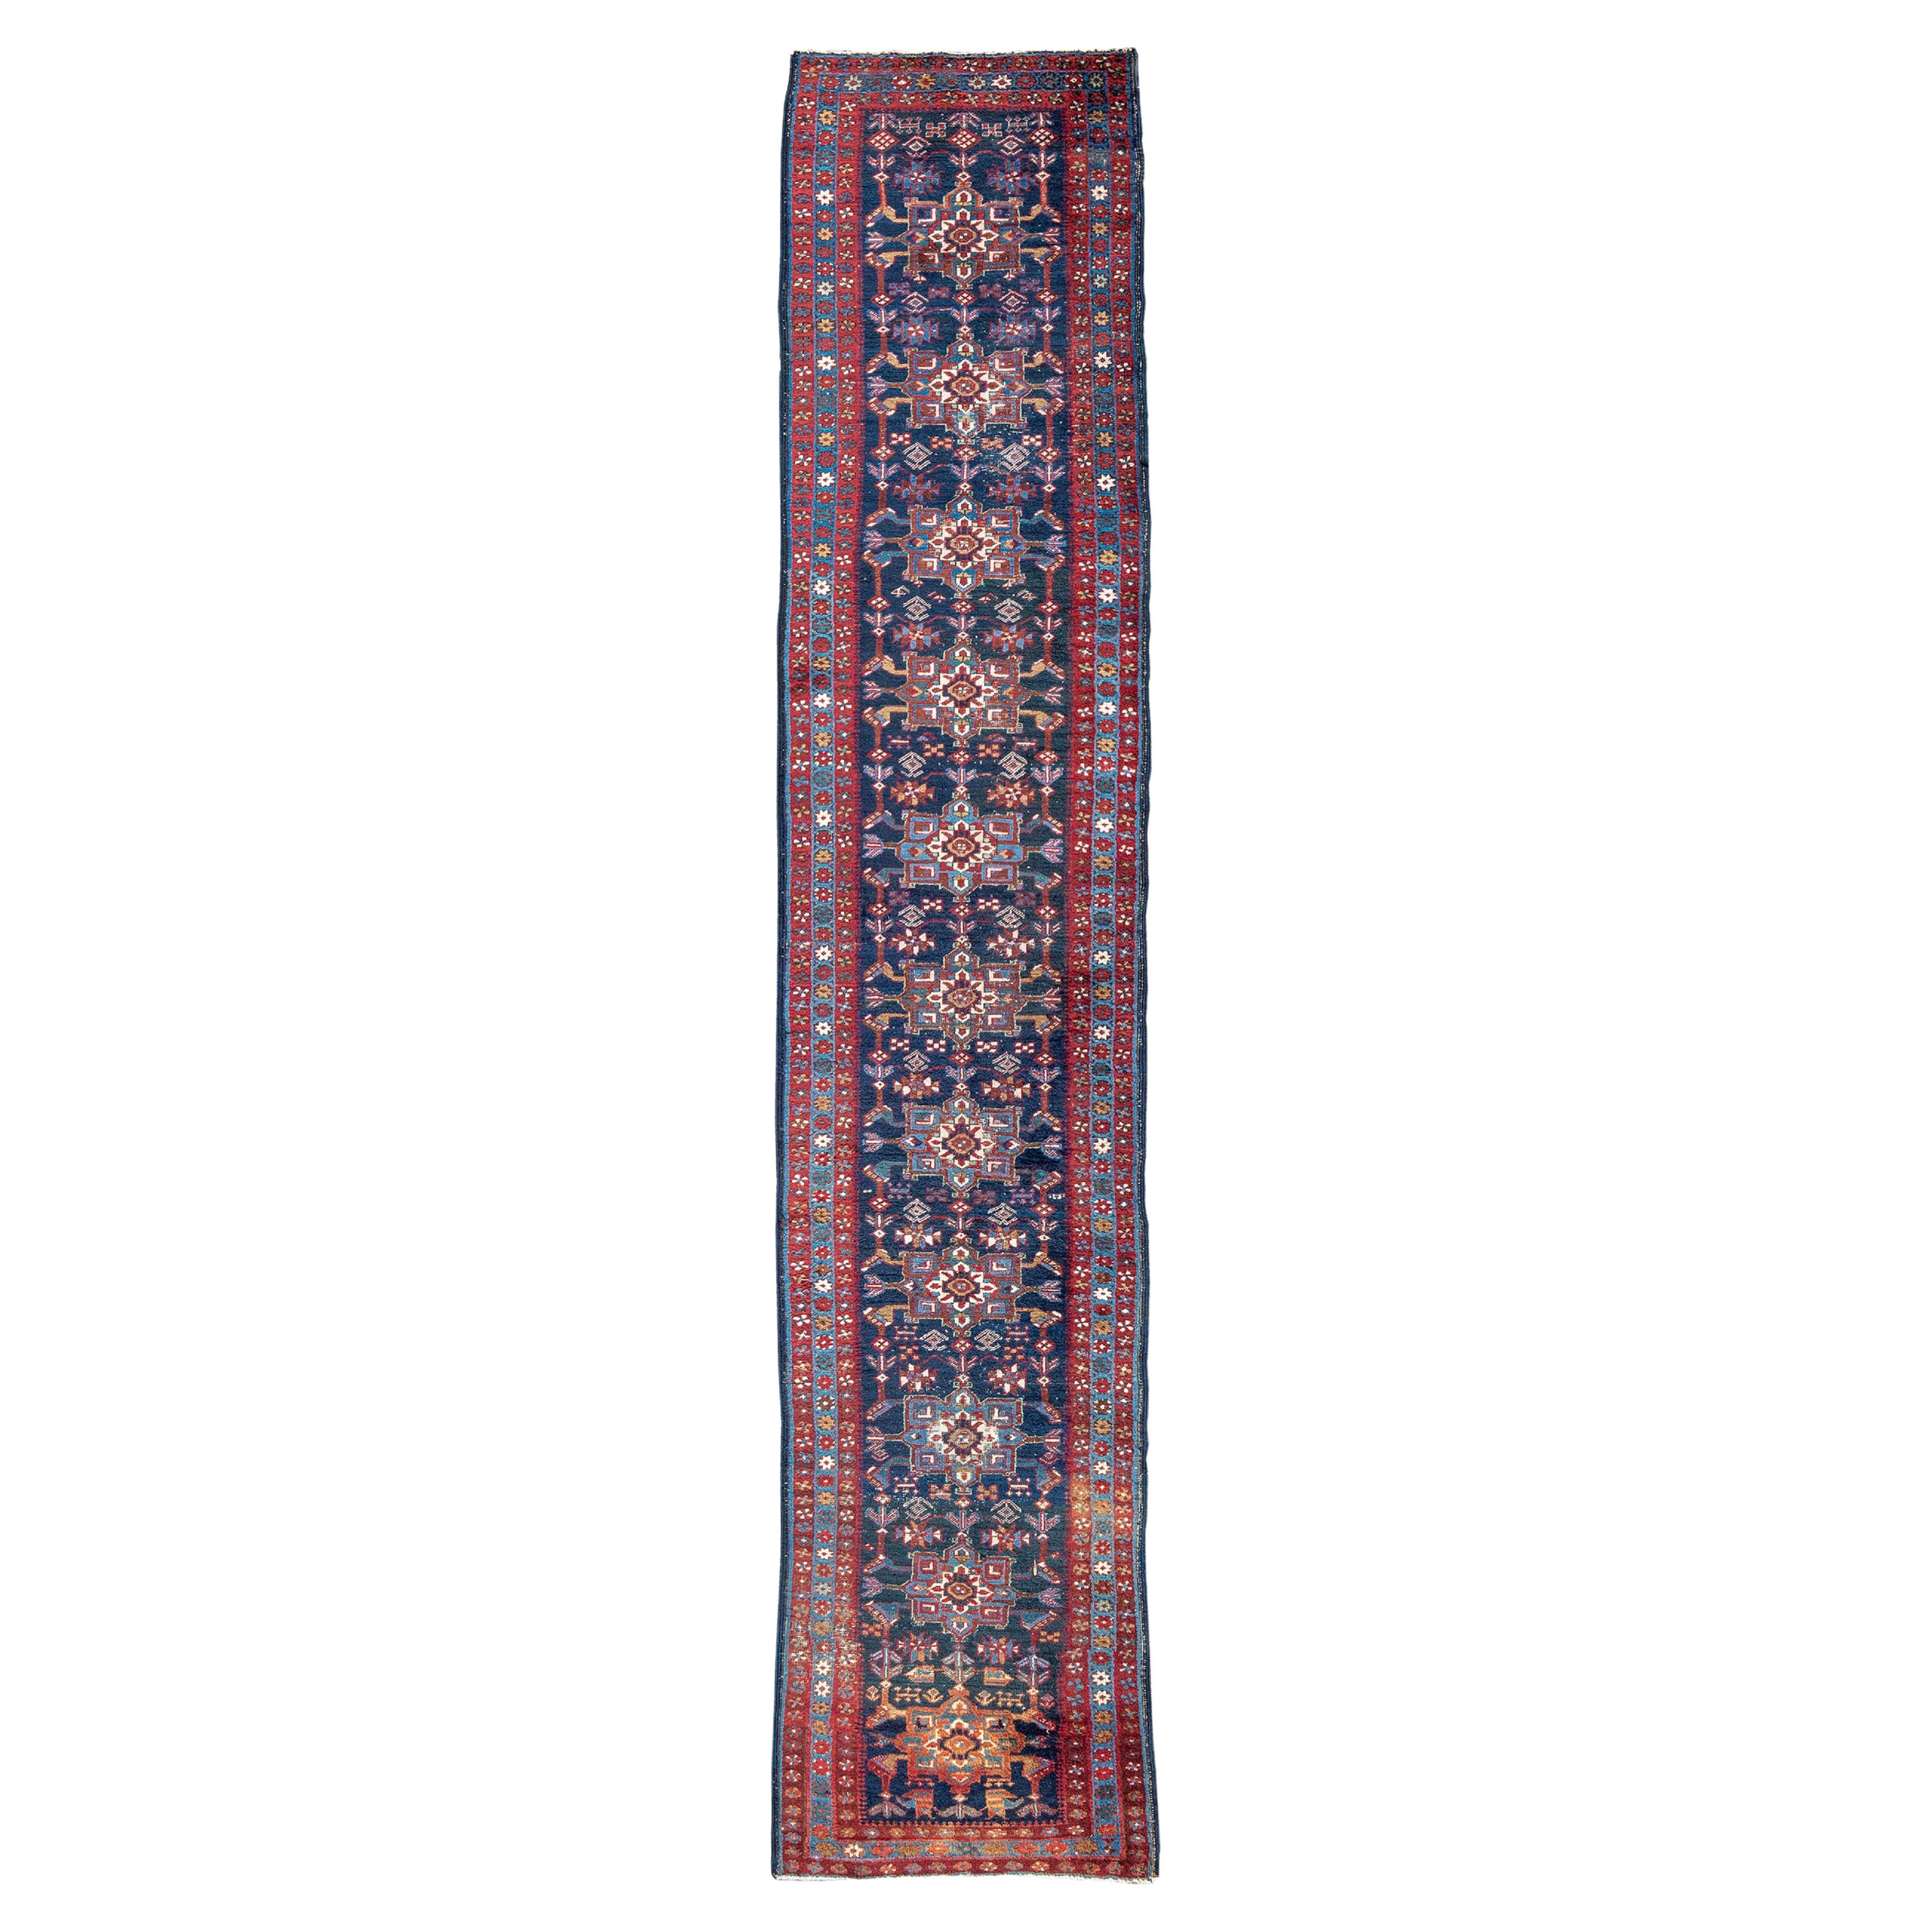 Antique Persian Heriz Runner Rug, Early 20th Century